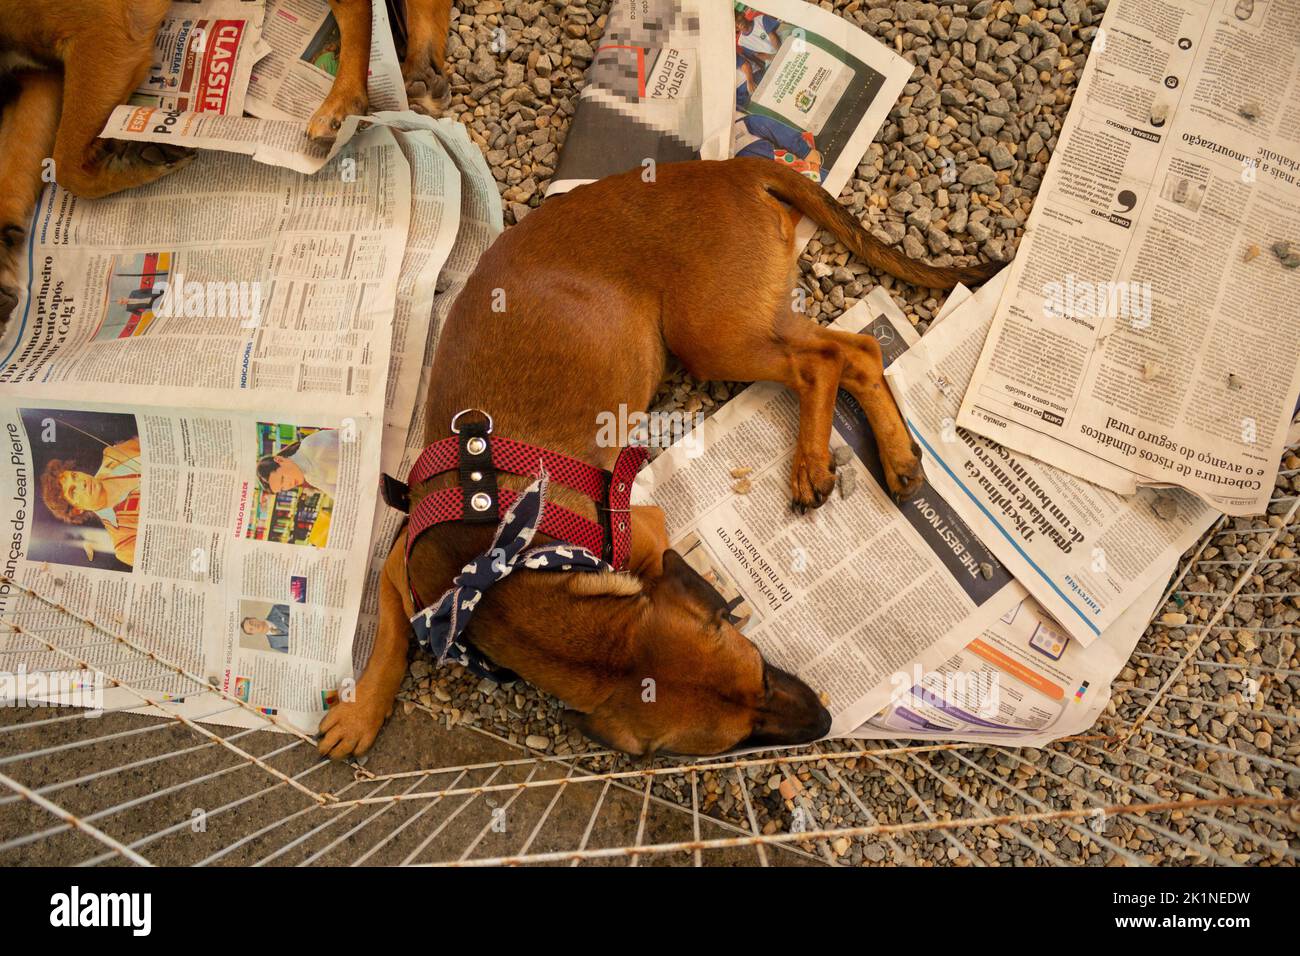 Goiânia, Goias, Brazil – September 17, 2022: A caramel dog, lying on sheets of newspaper, on display inside a pen at an animal adoption fair. Stock Photo